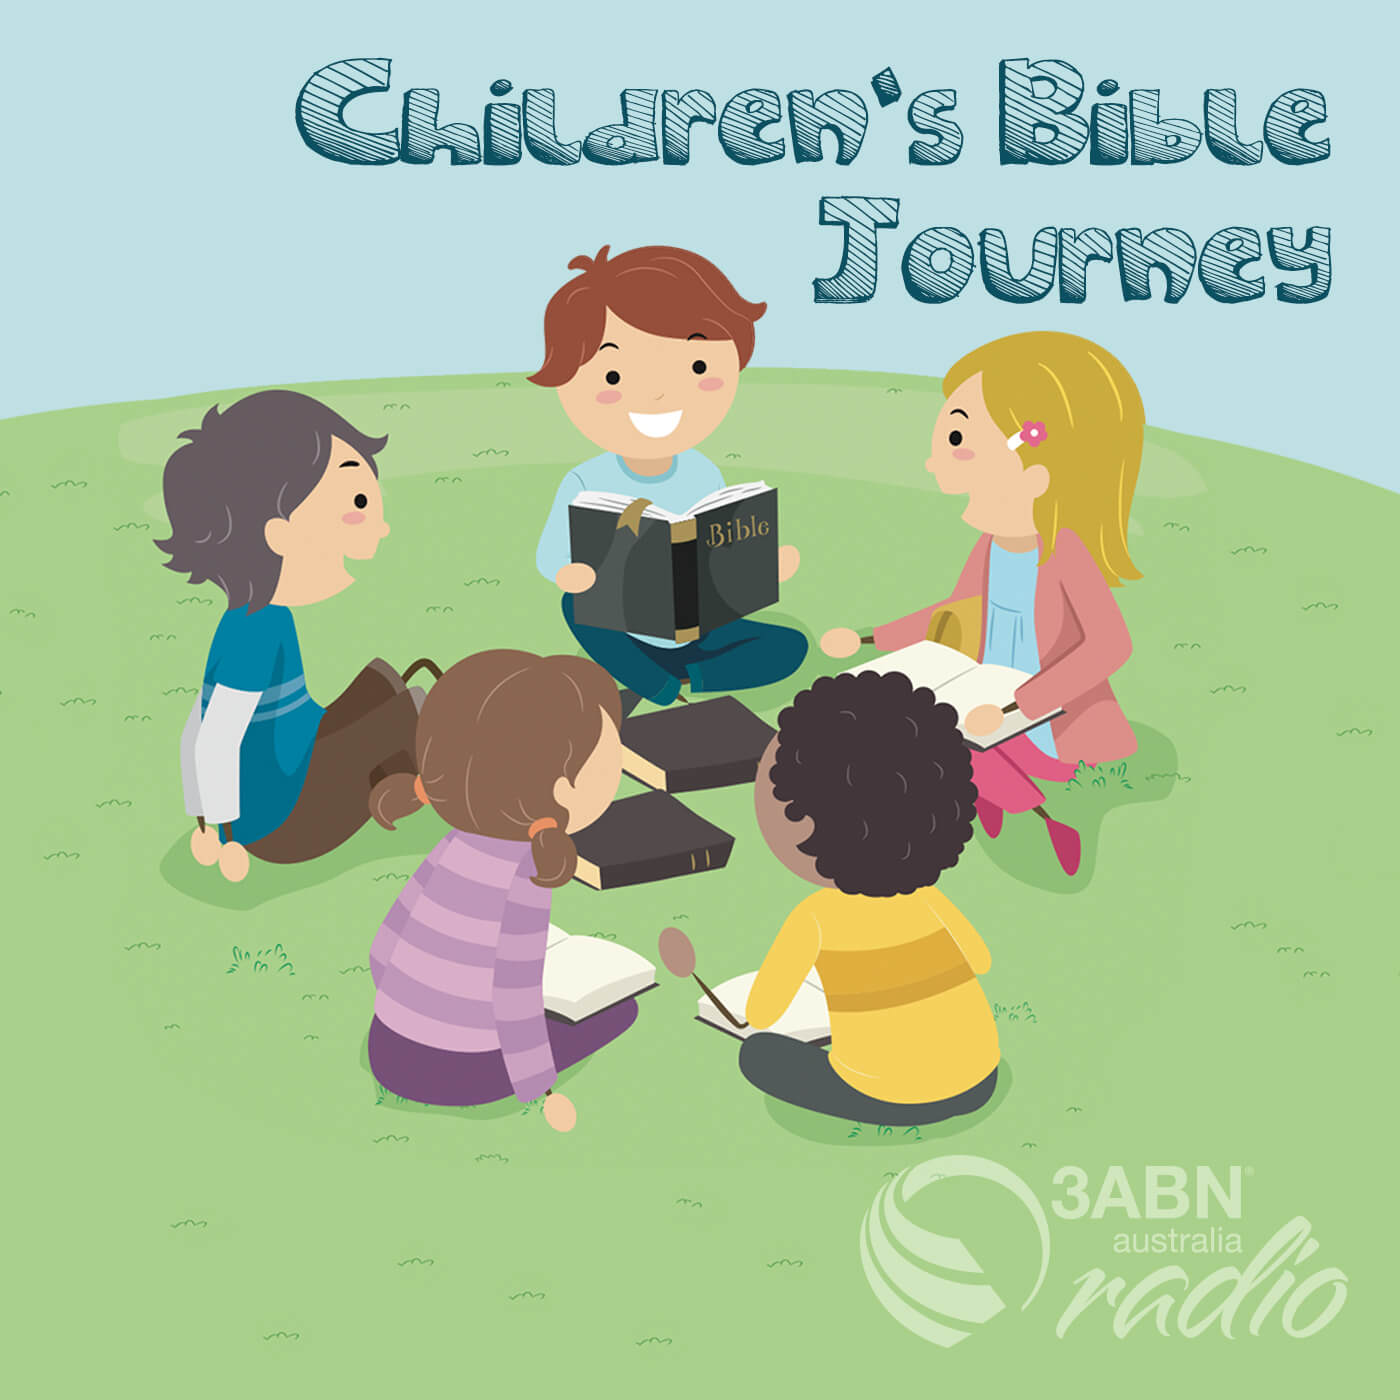 Children's Bible Journey - 2213